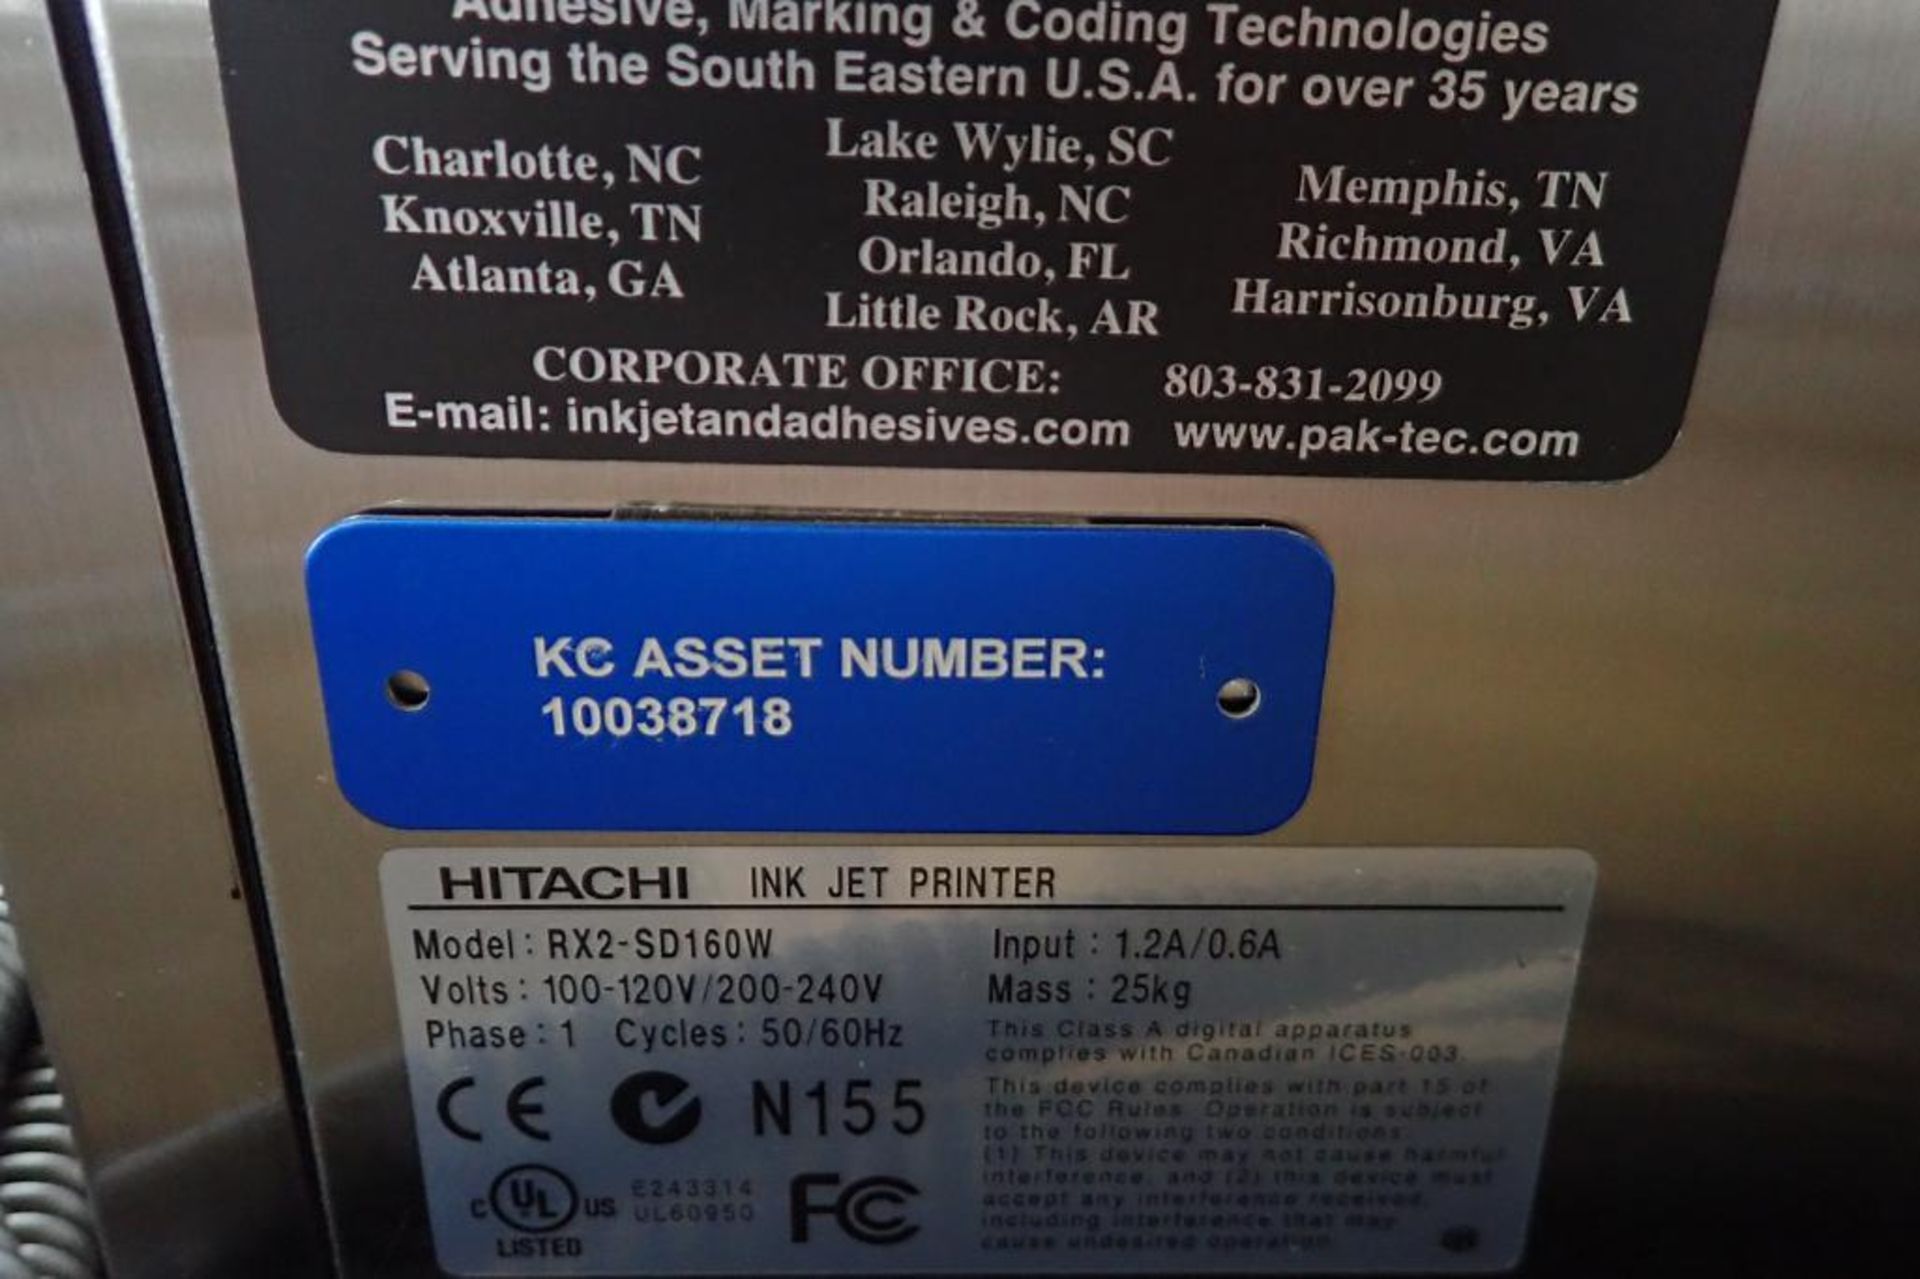 Hitachi ink jet printer, Model RX2-SD160W, SN R2S05261503, 1 ph., 100-120 volt, on stand { Rigging - Image 12 of 12